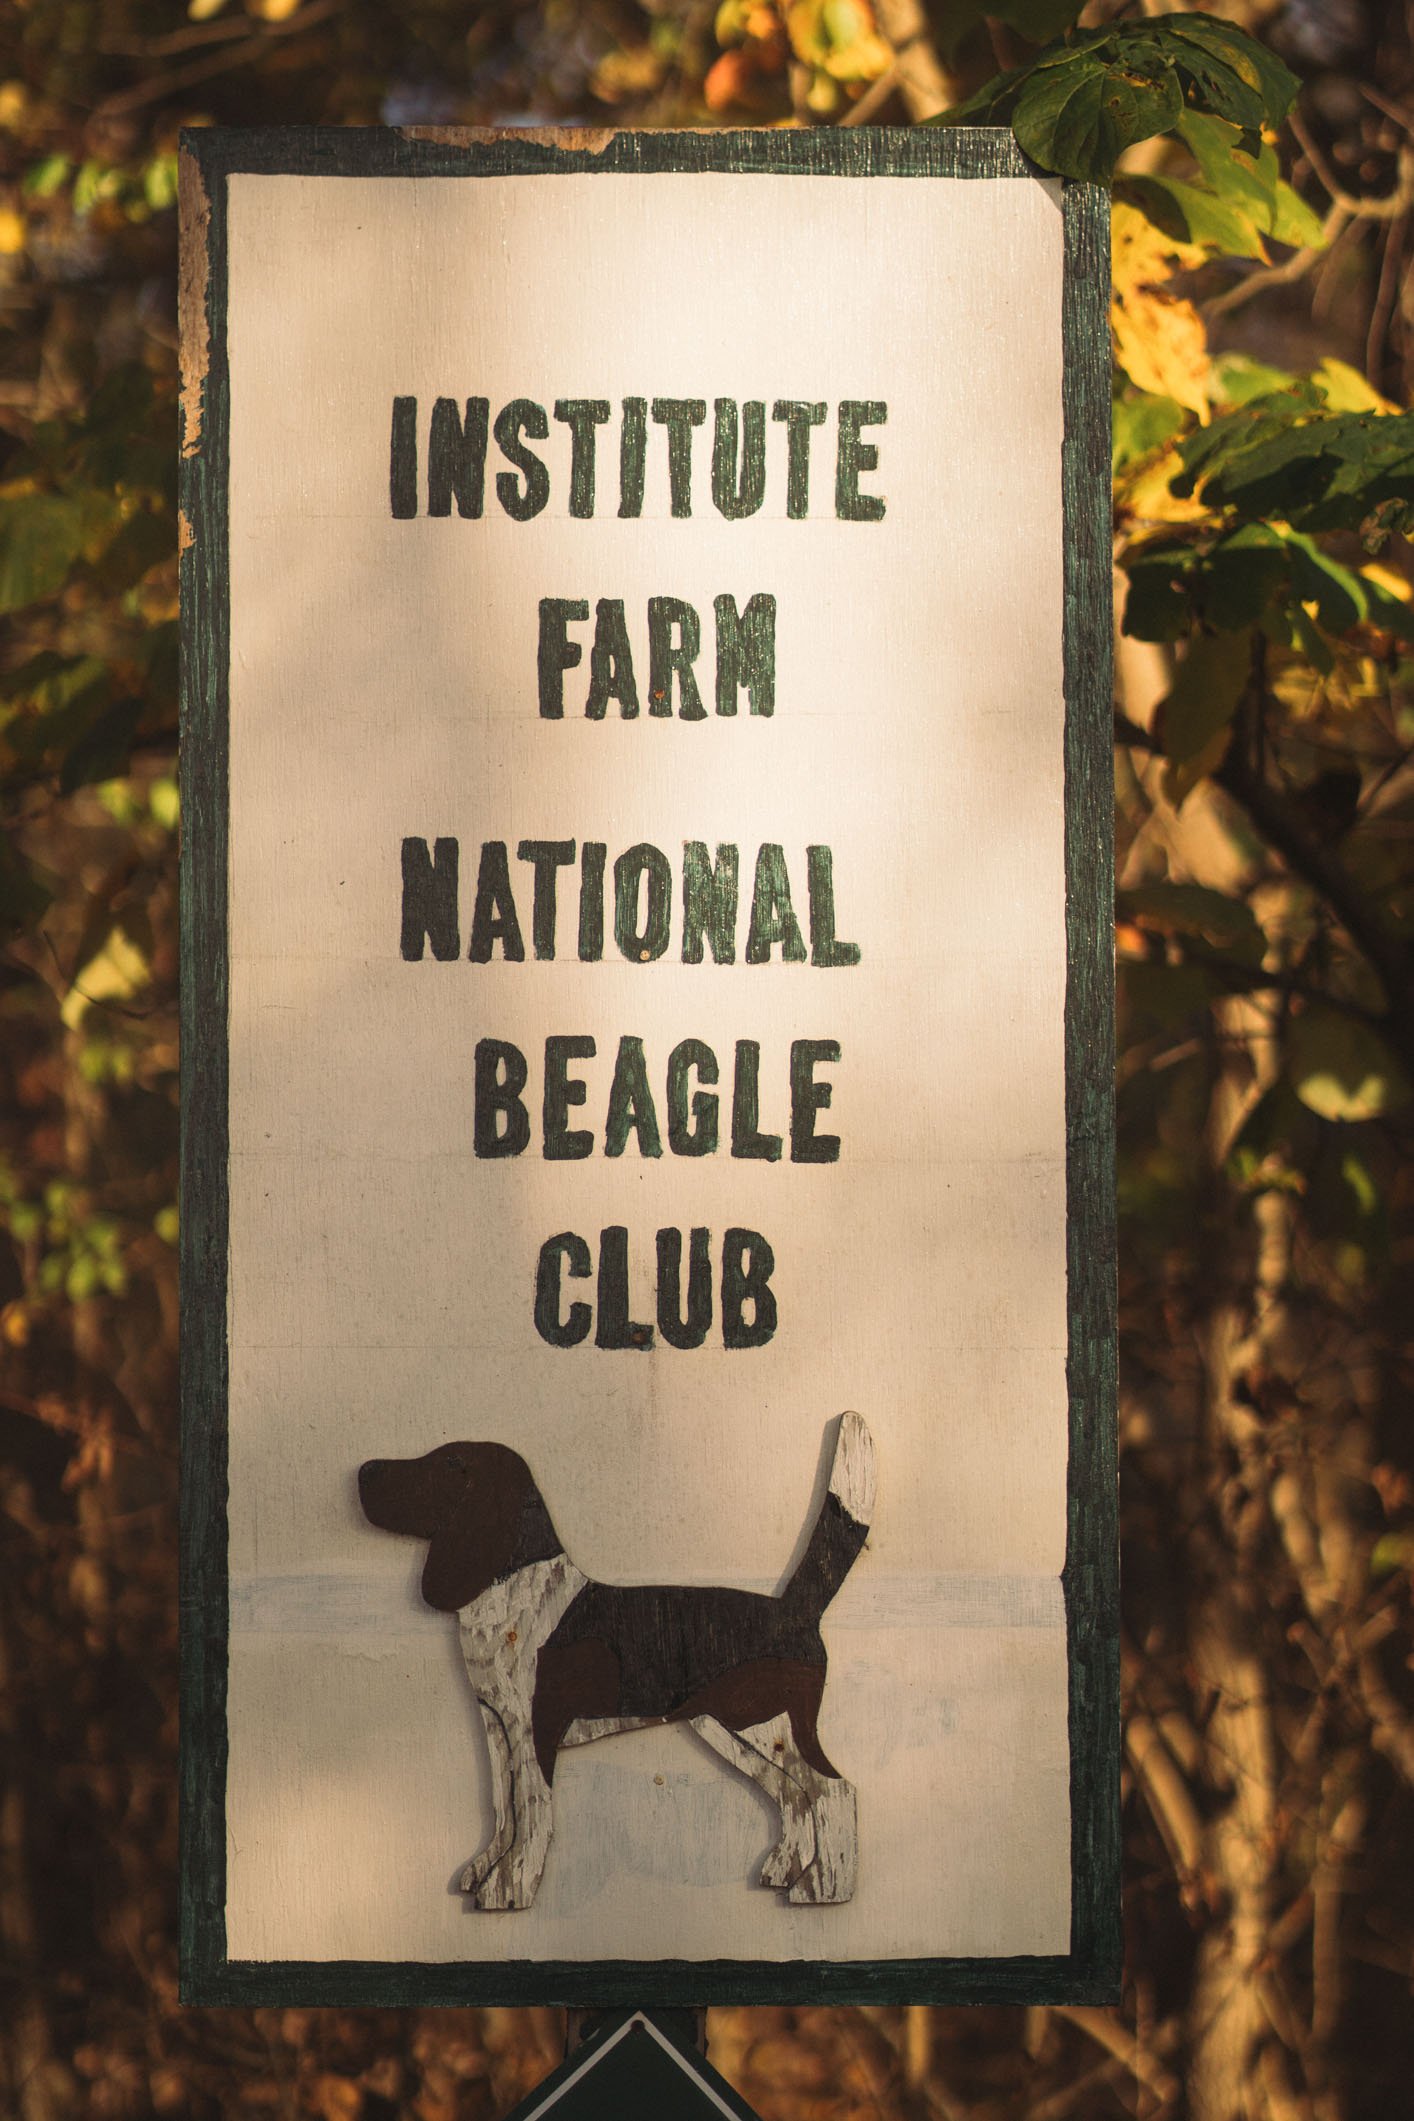 BeagleBassetPack 10-19-20 (1 of 22).jpg